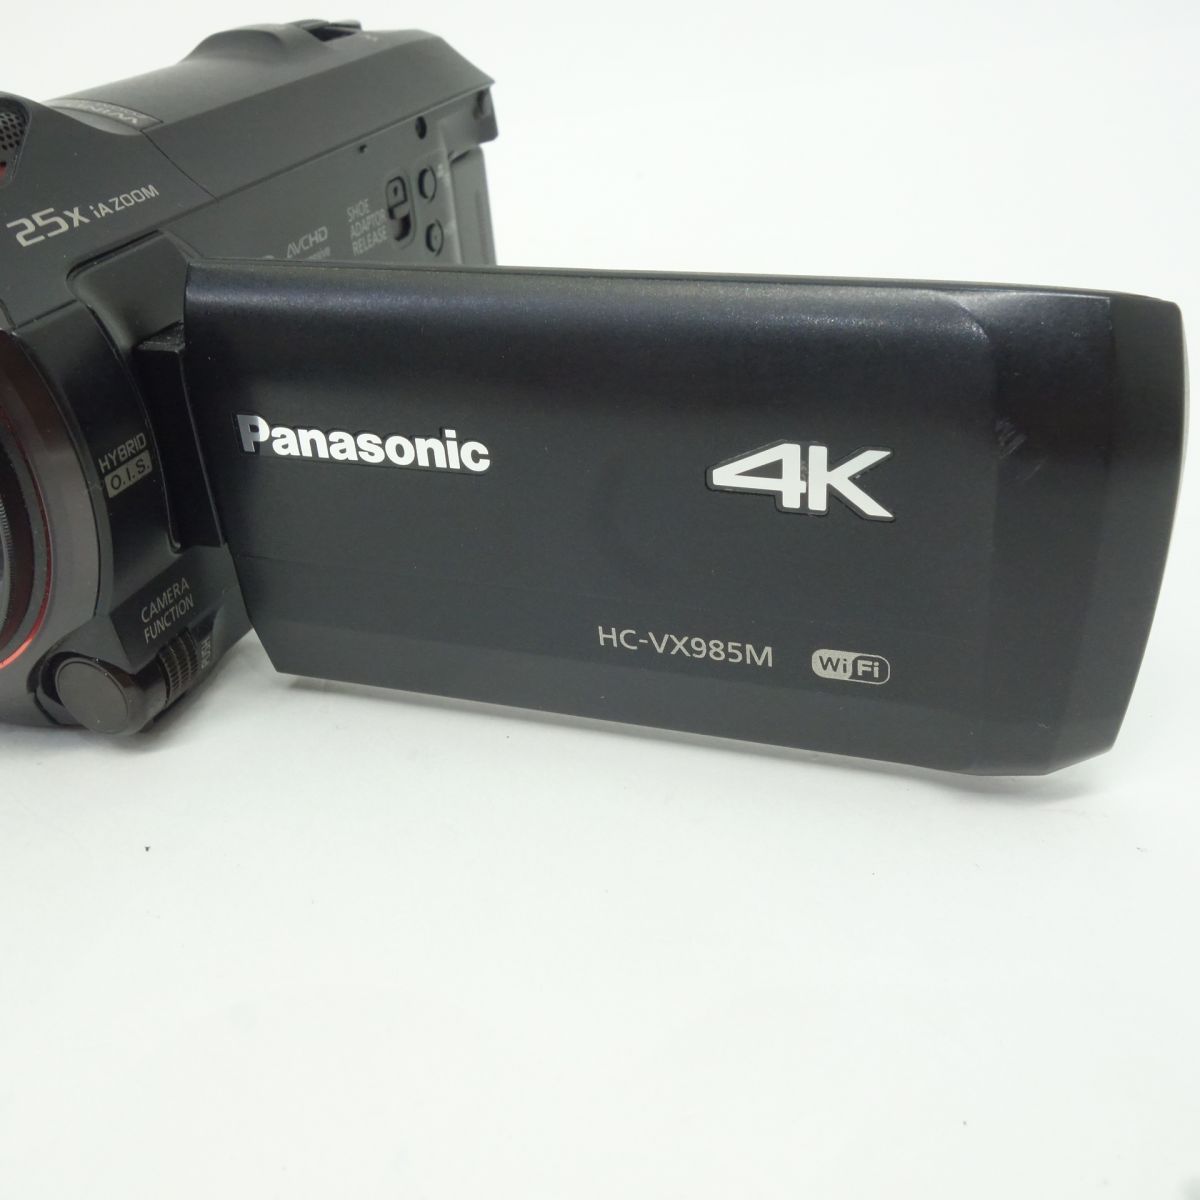 Panasonic パナソニック HC-VX985M(64GR内蔵) 4Kデジタルビデオカメラ 中古 ◇2410 - カメラ、光学機器